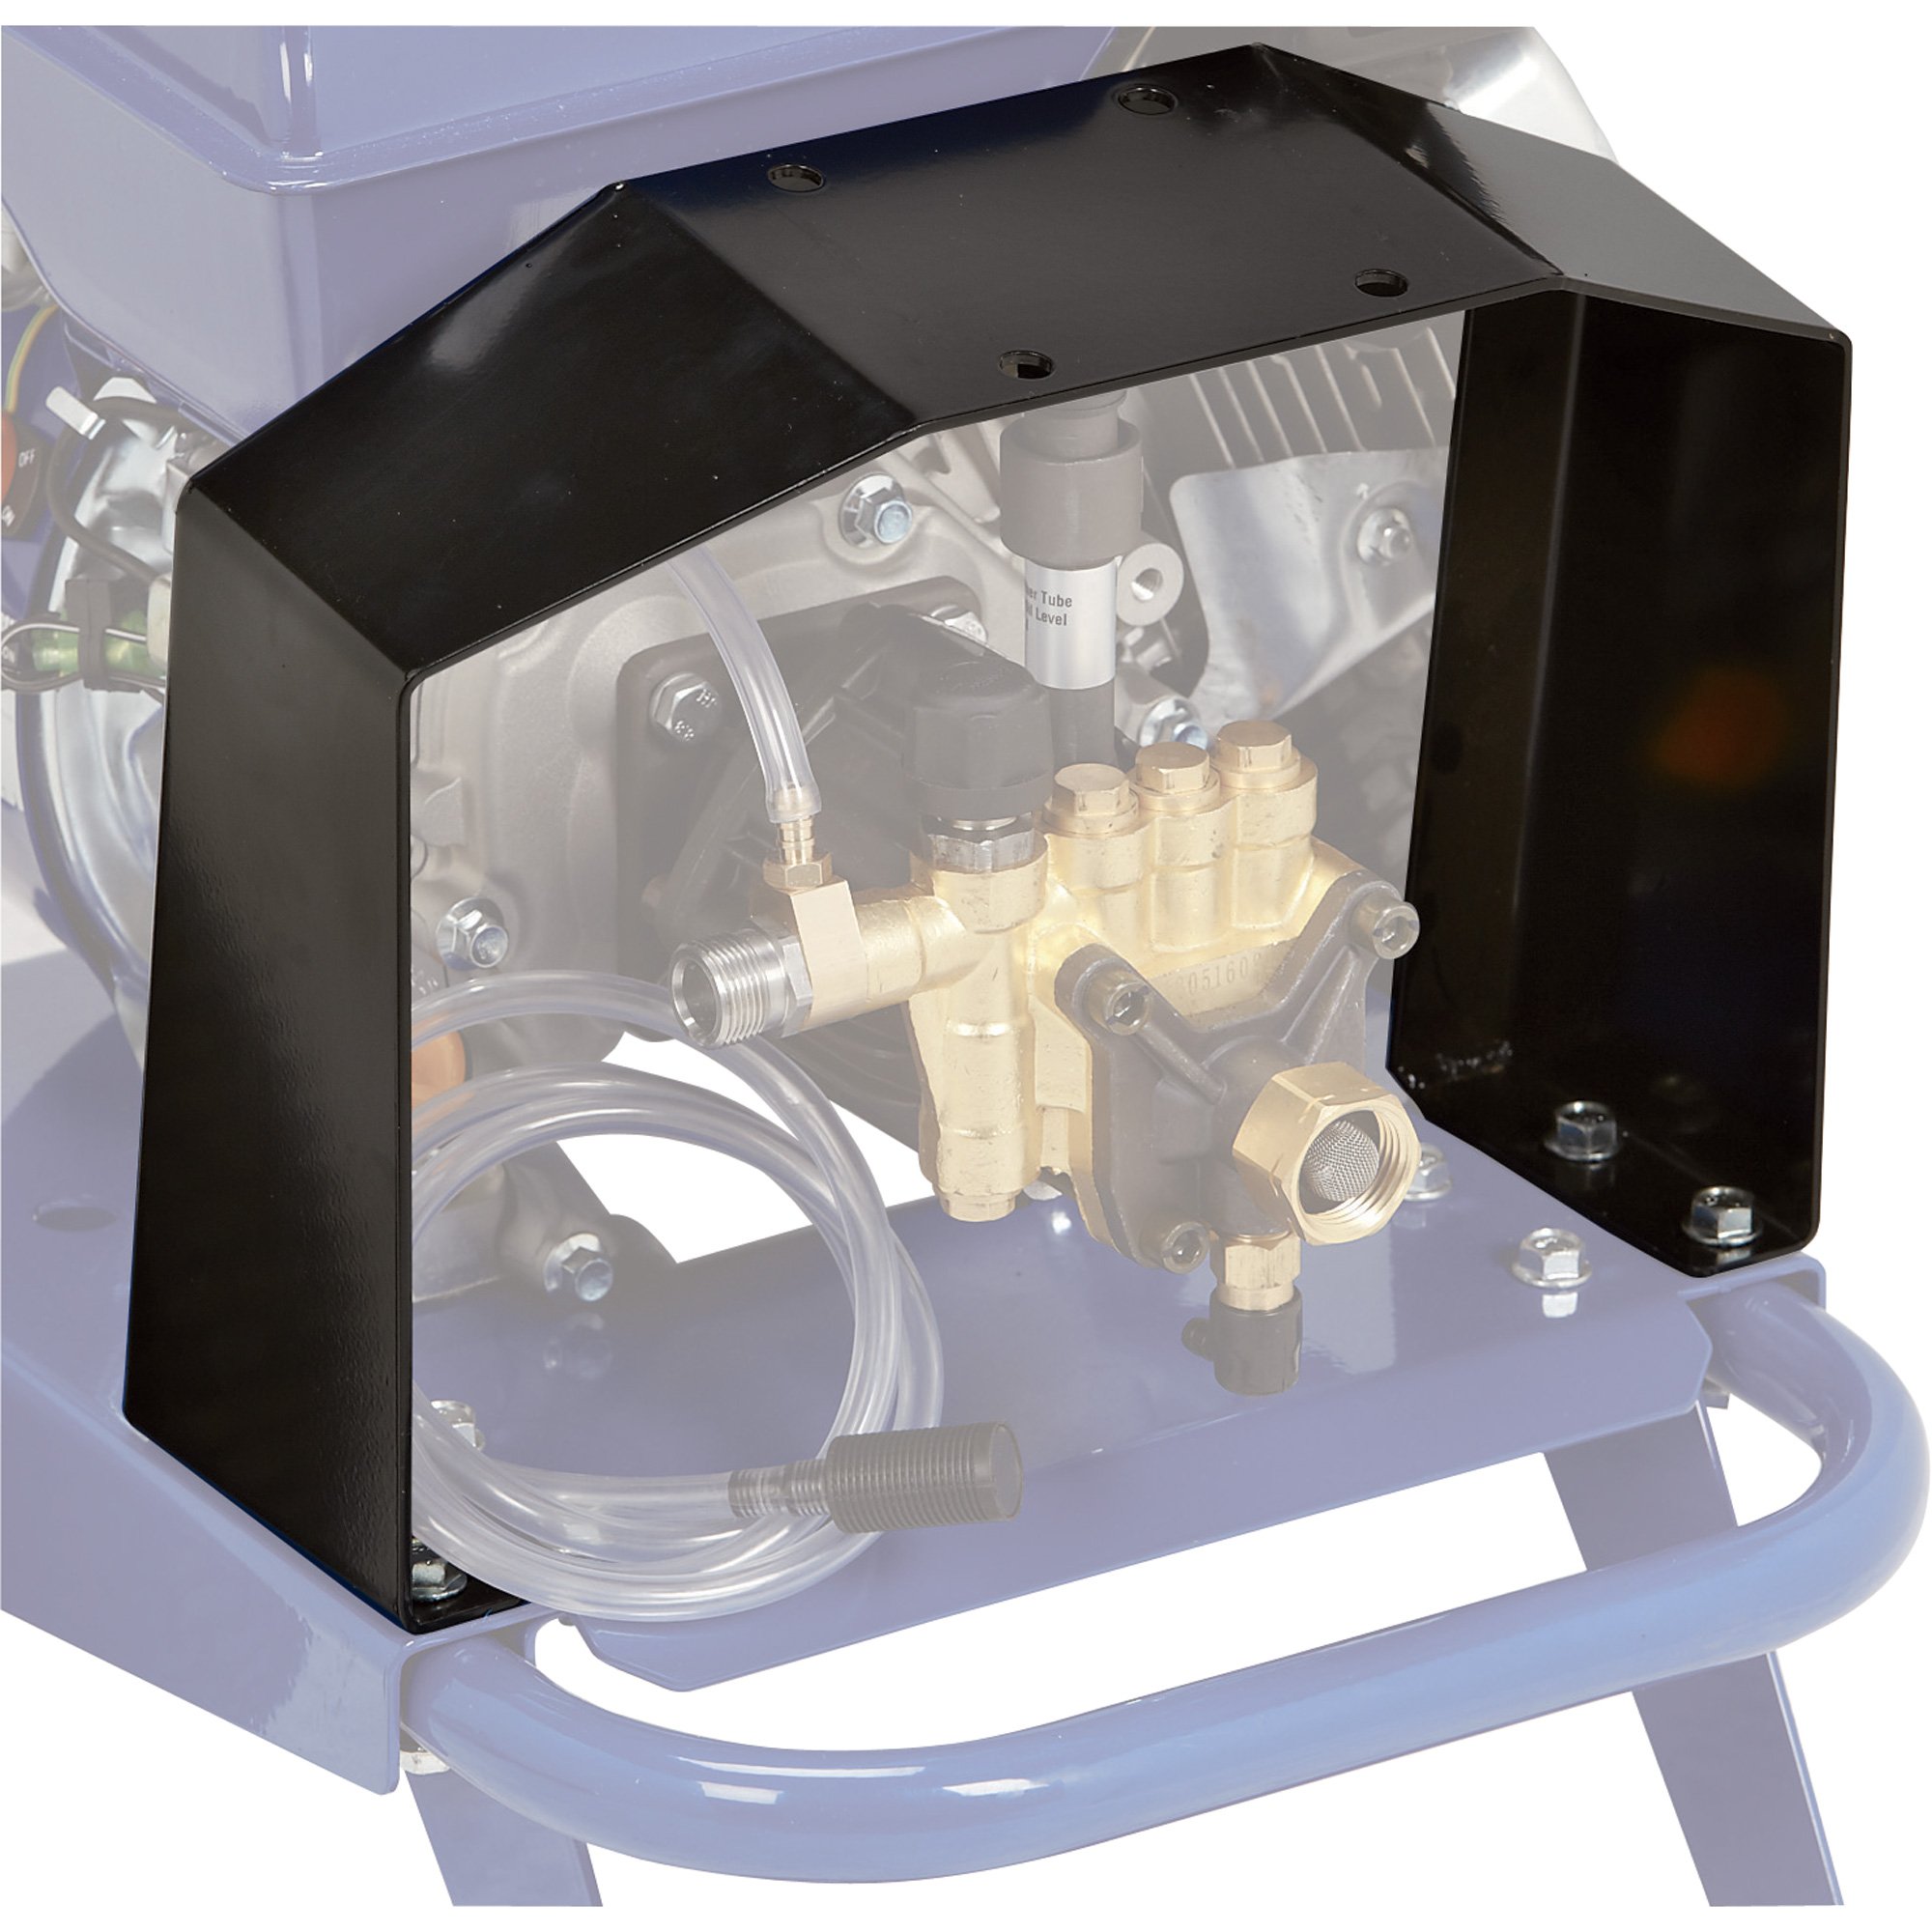 Powerhorse Pressure Washer Hose Reel Mount — Fits Powerhorse 3000 PSI, 2.5  GPM Pressure Washers, Item#s 1577110 and 15771120